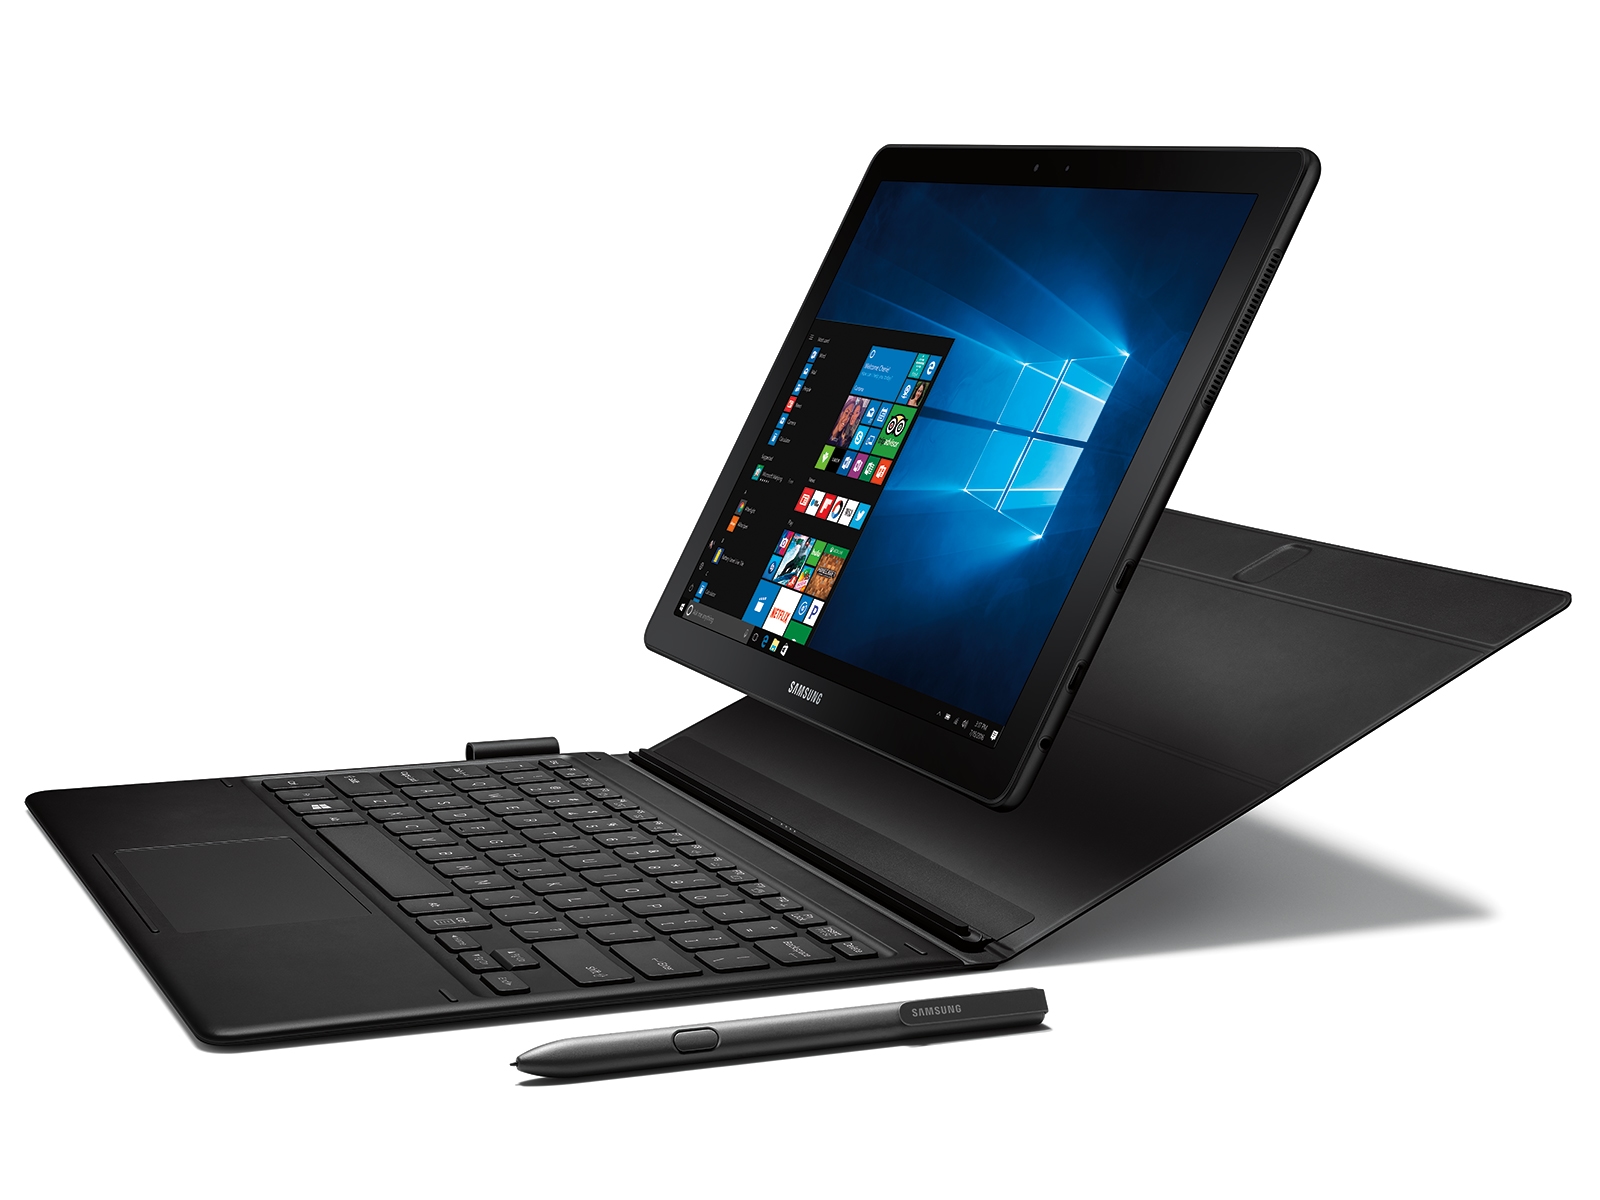 Galaxy Book 12” Windows 10 Home, 2-in-1 PC (Wi-Fi), Black (4GB RAM/128GB  SSD), Tablets - SM-W720NTKBXAR